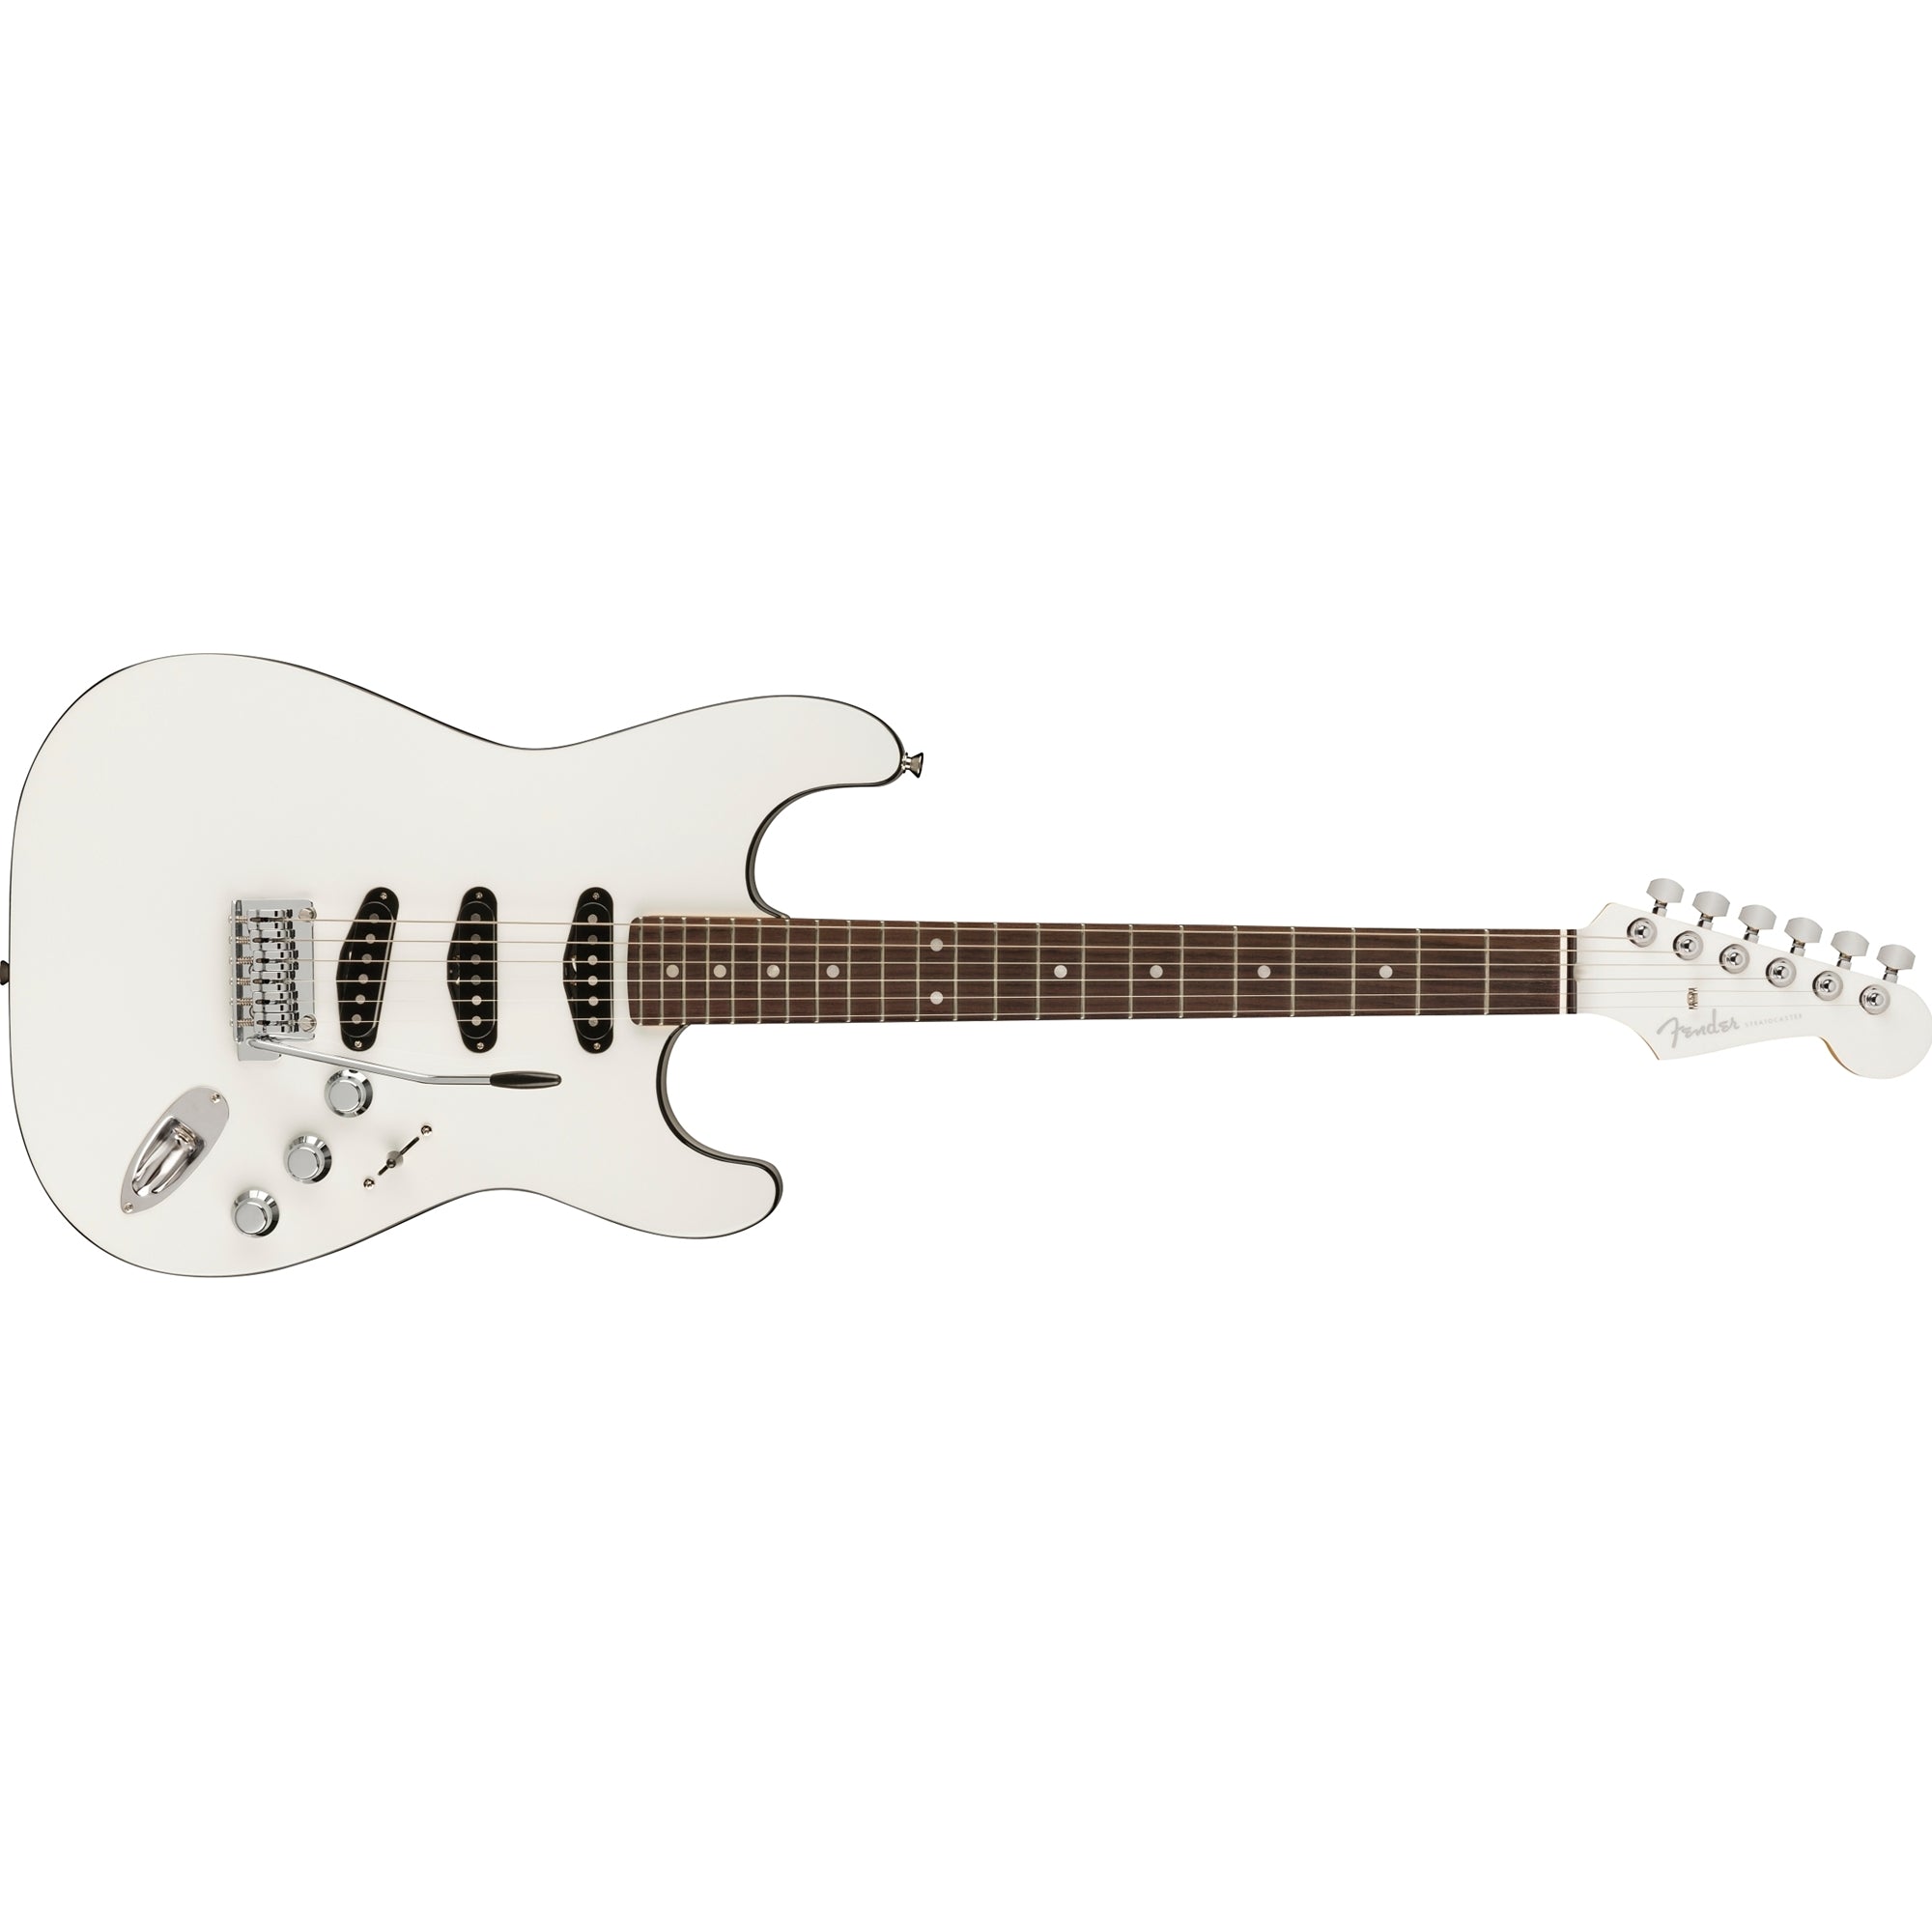 FENDER #0252000310 Aerodyne Special Stratocaster Electric Guitar (Bright White)